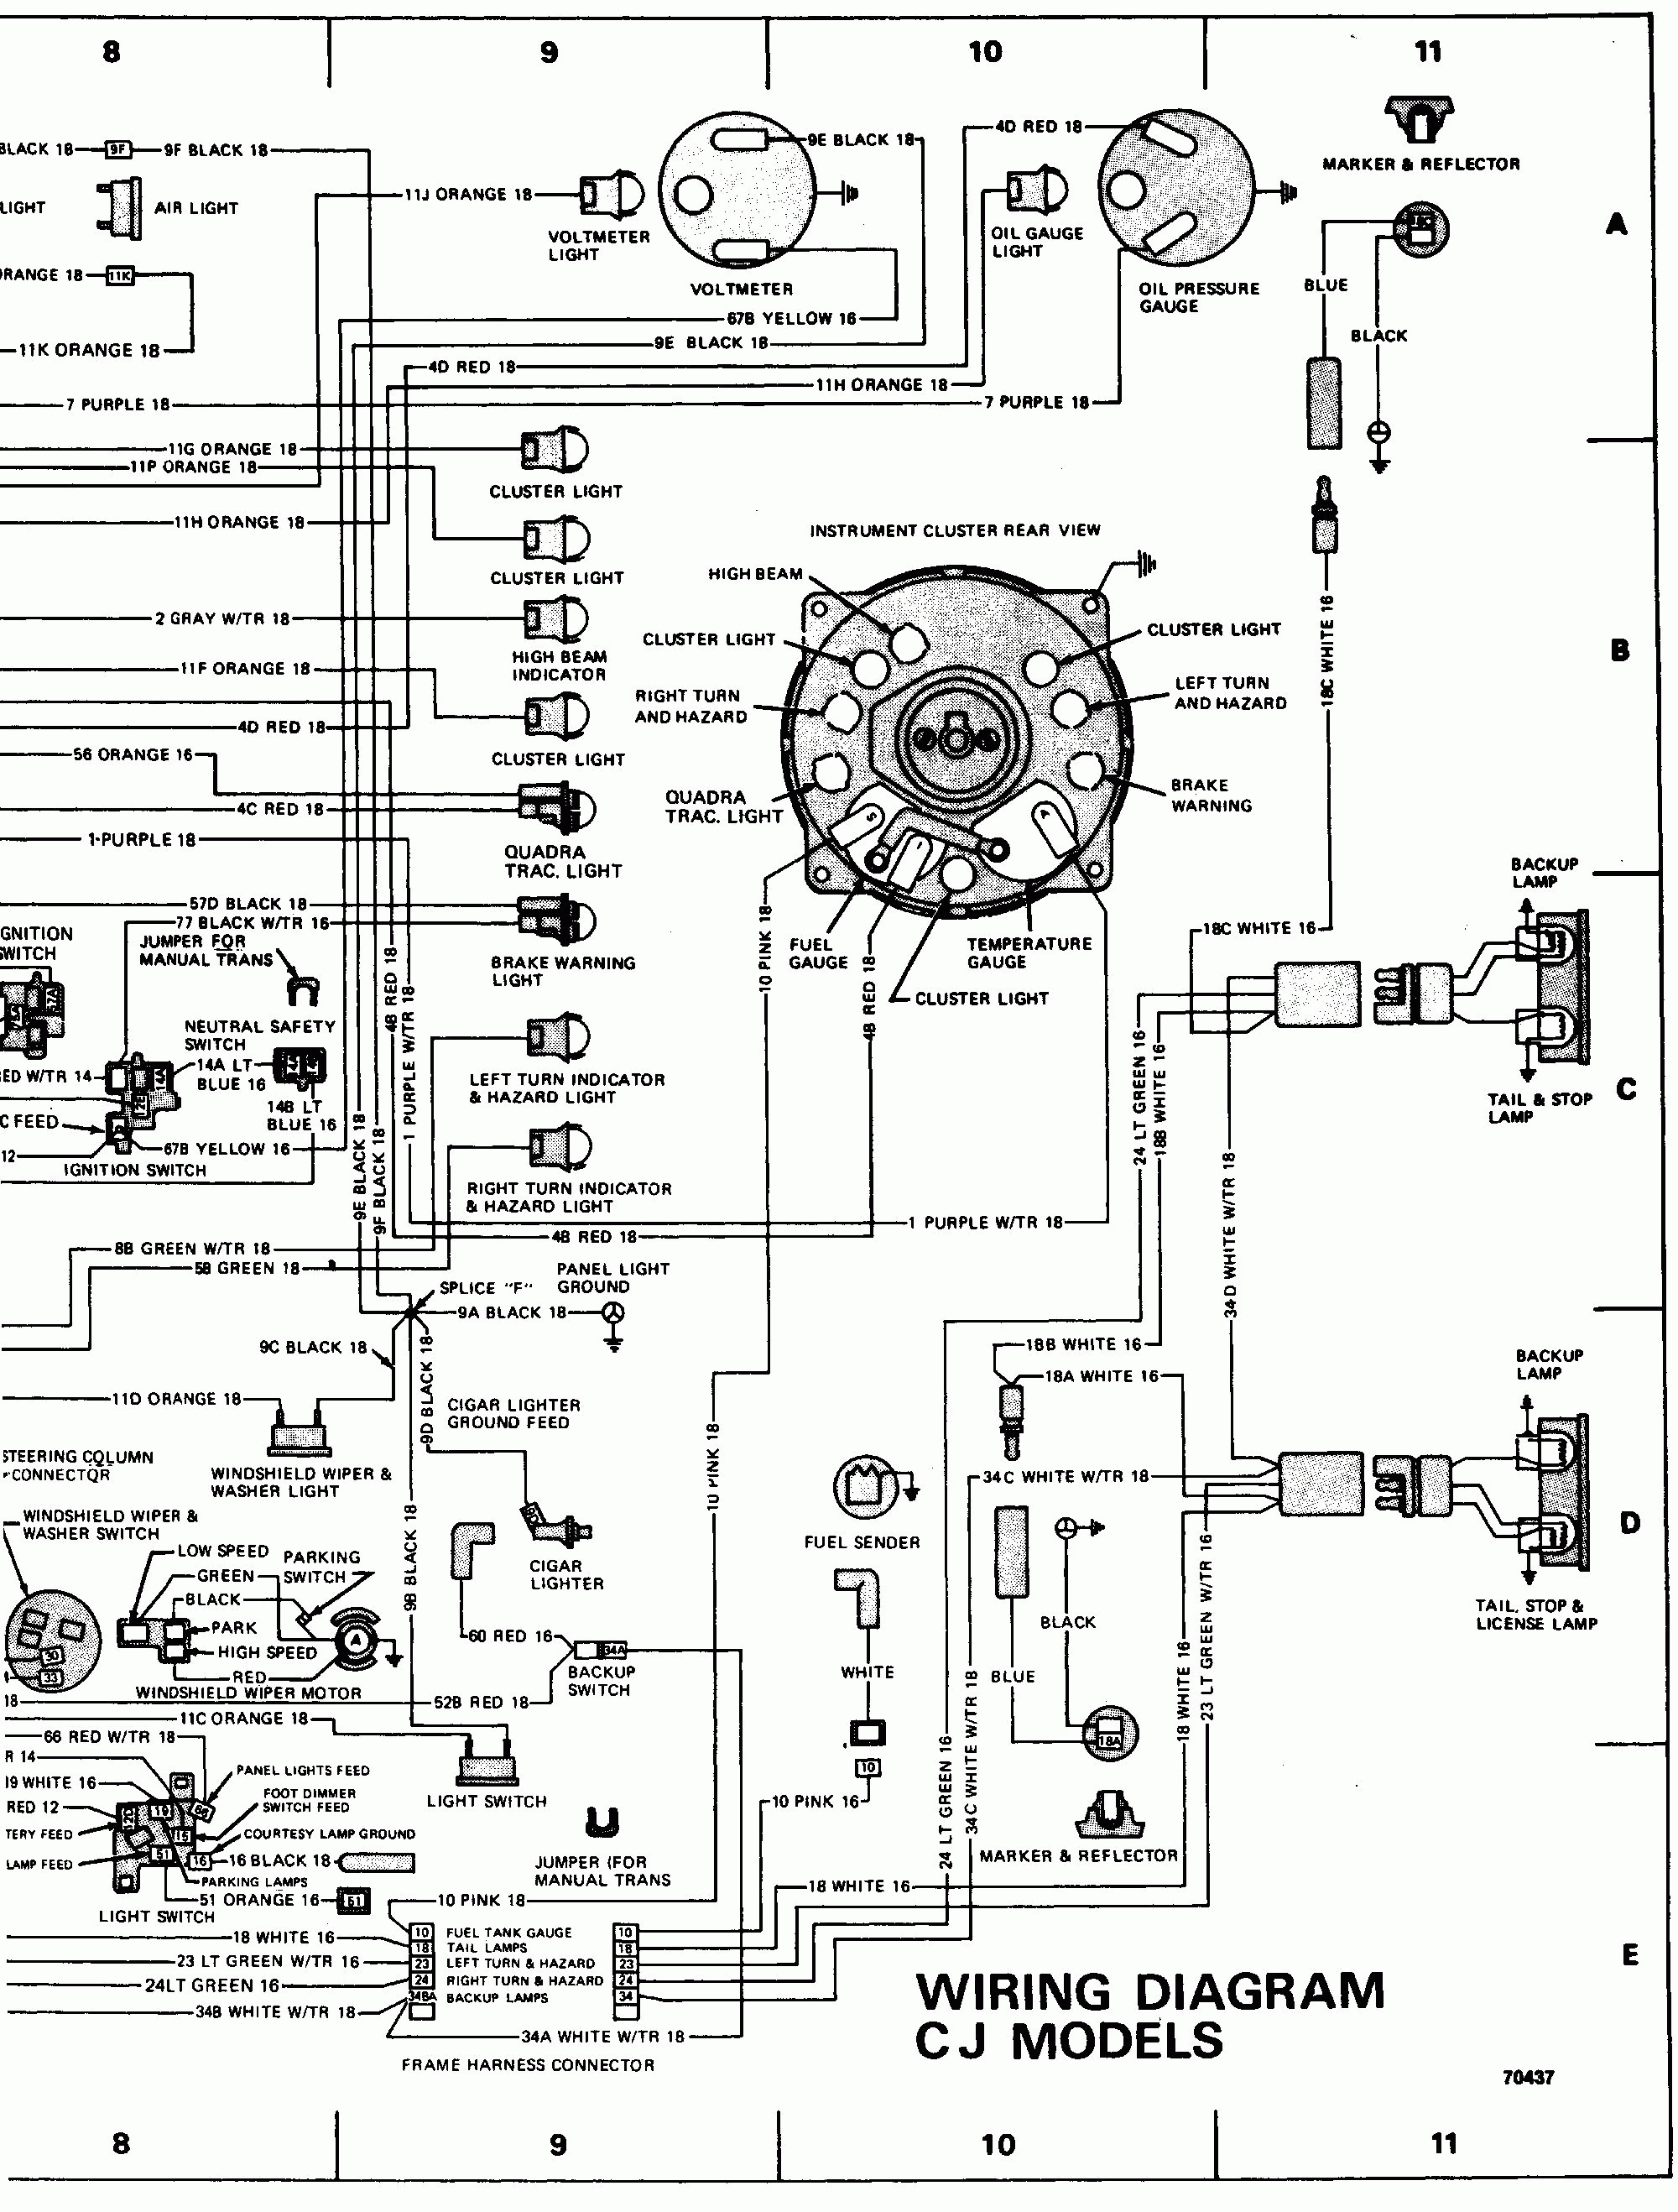 Amc Wiring Harness | Wiring Diagram - Fuel Pump Wiring Harness Diagram